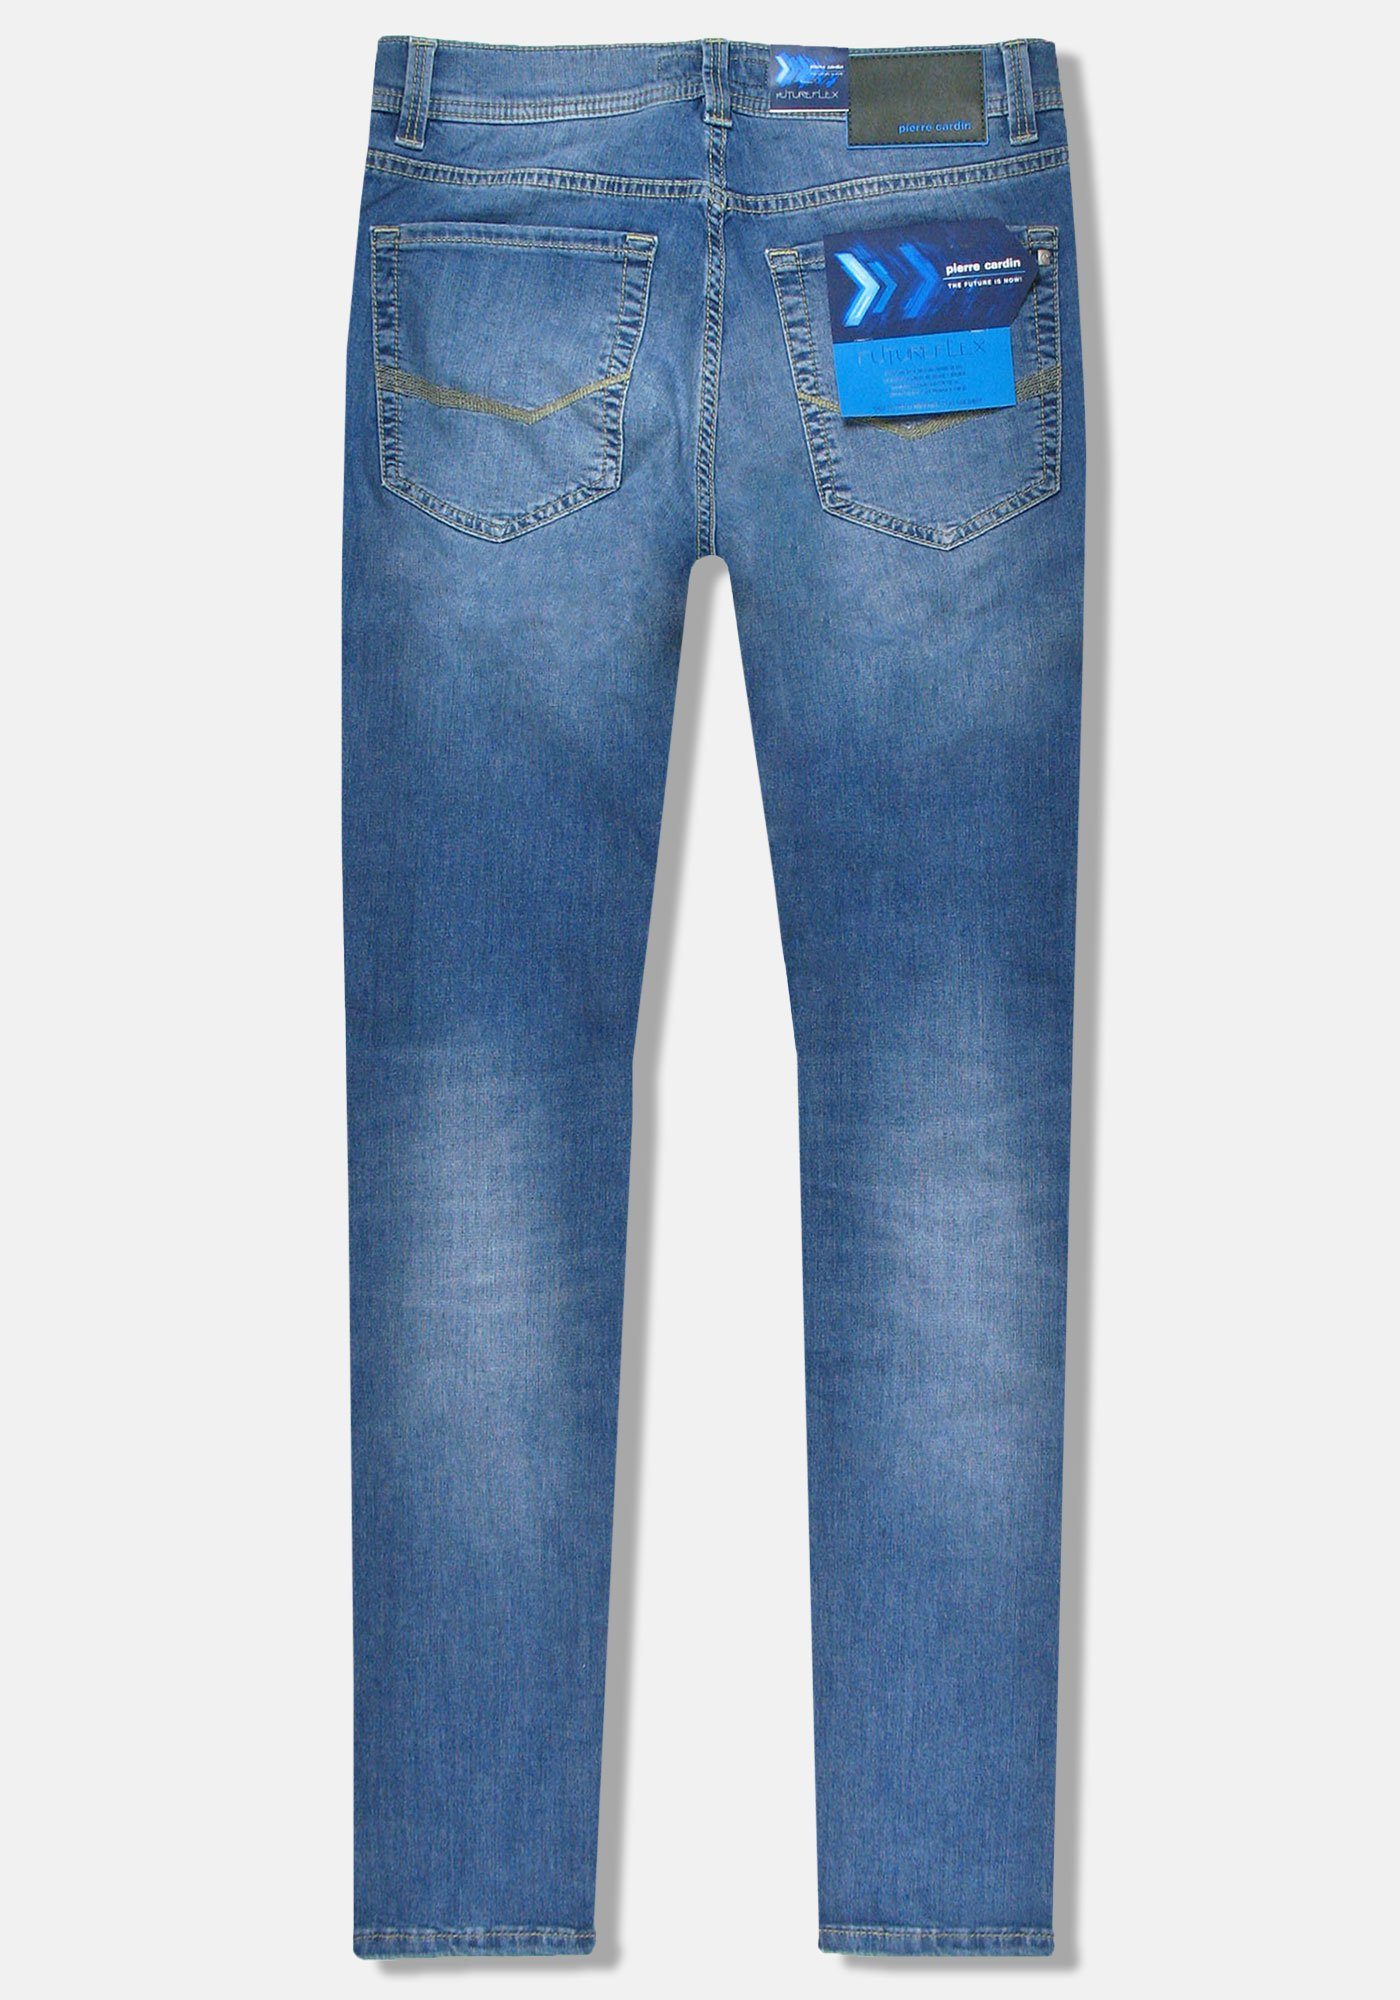 Pierre Cardin 5-Pocket-Jeans Cotton Fit Tapered Futureflex Summer Organic Jeans Lyon Blue Vintage